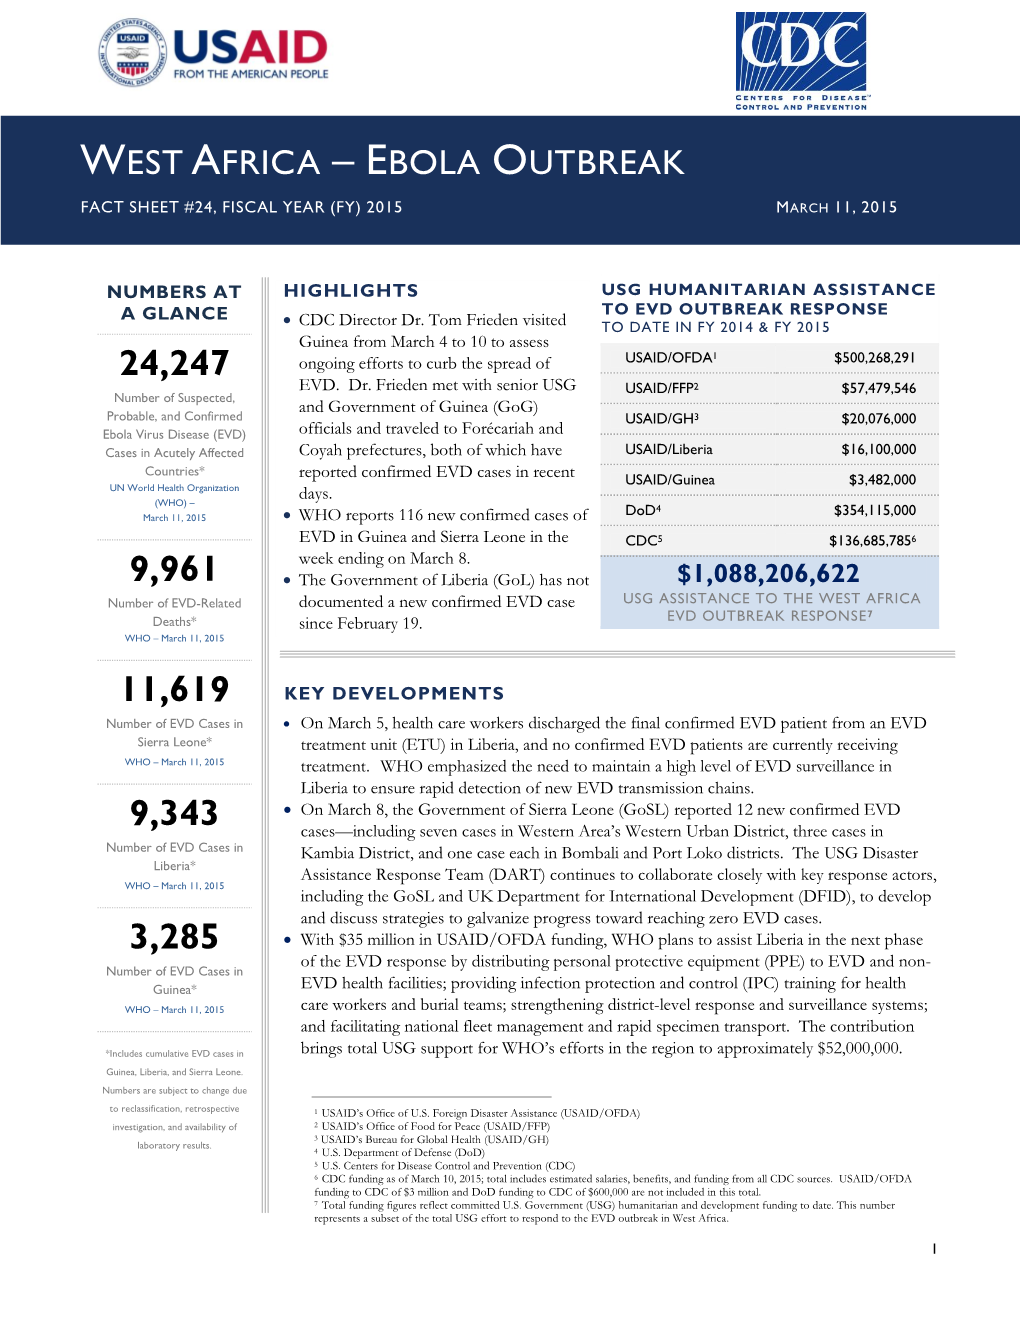 West Africa Ebola Outbreak Fact Sheet